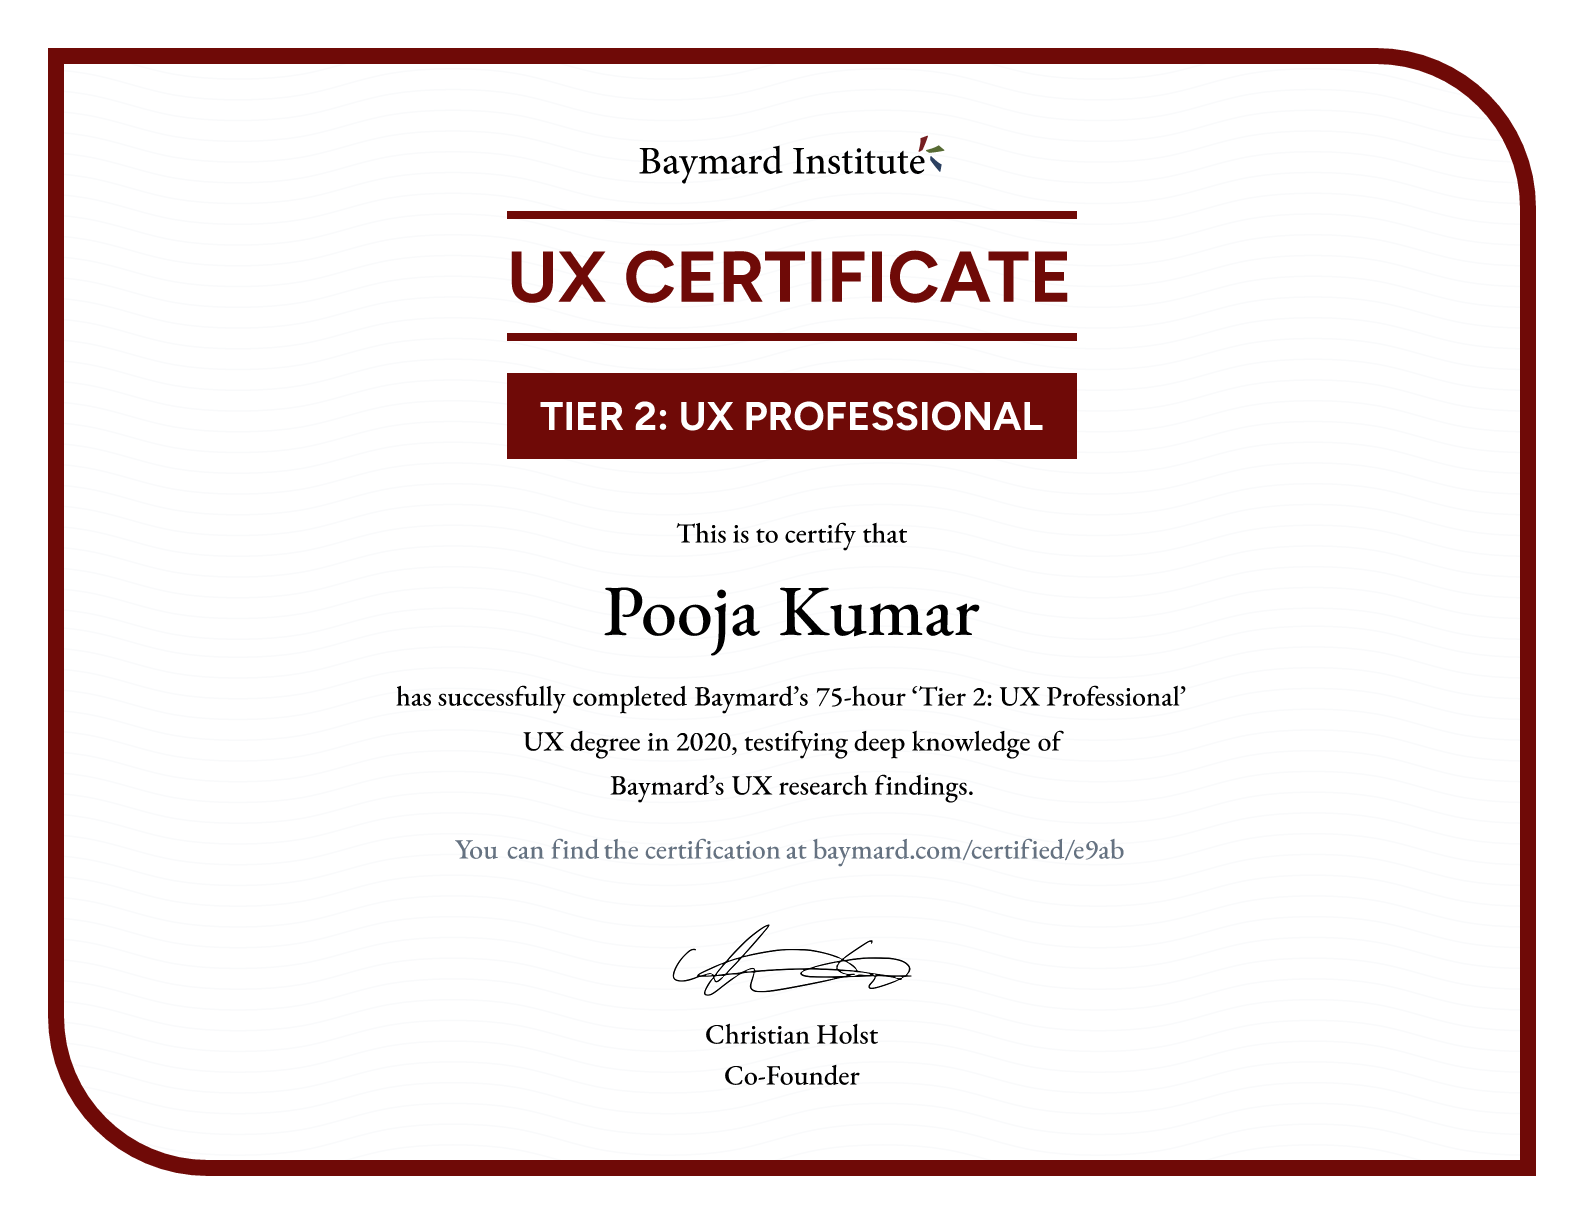 Pooja Kumar’s certificate